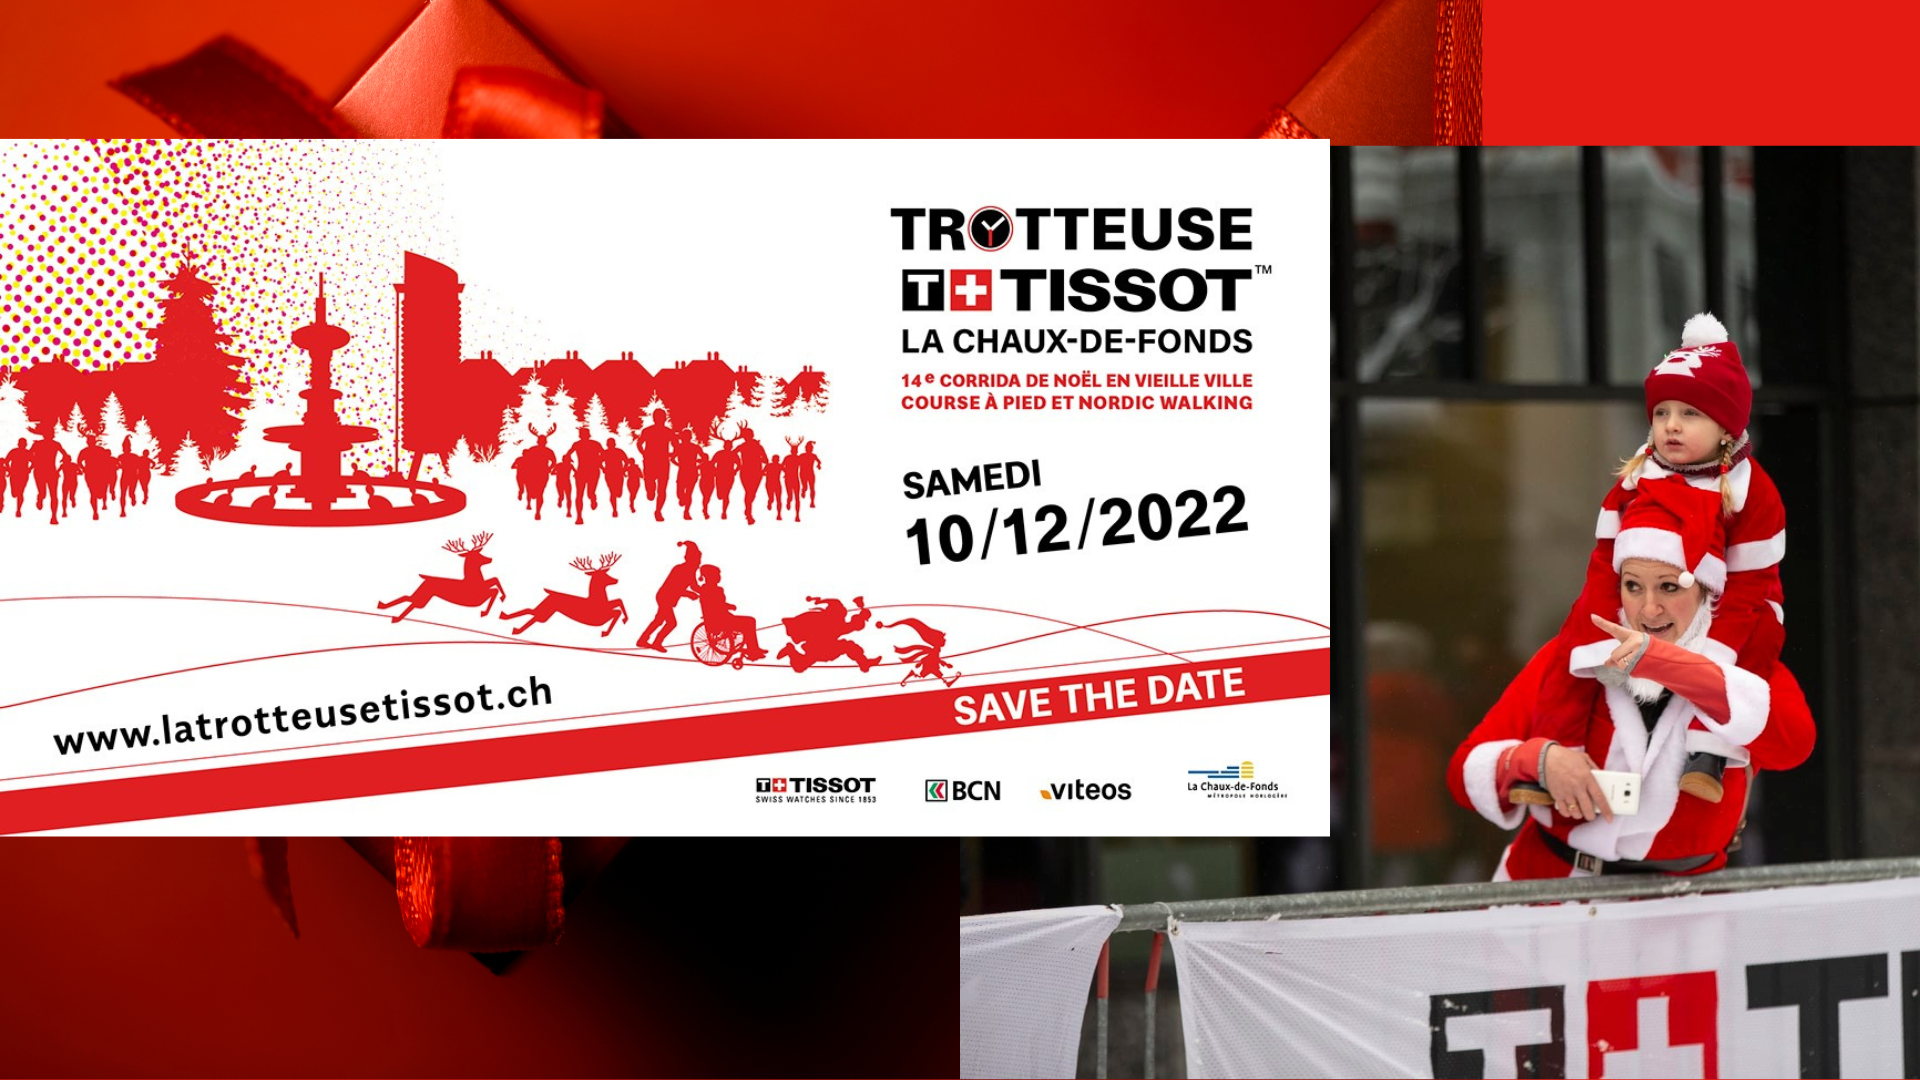 Save the date trotteuse-Tissot du 10.12.2022